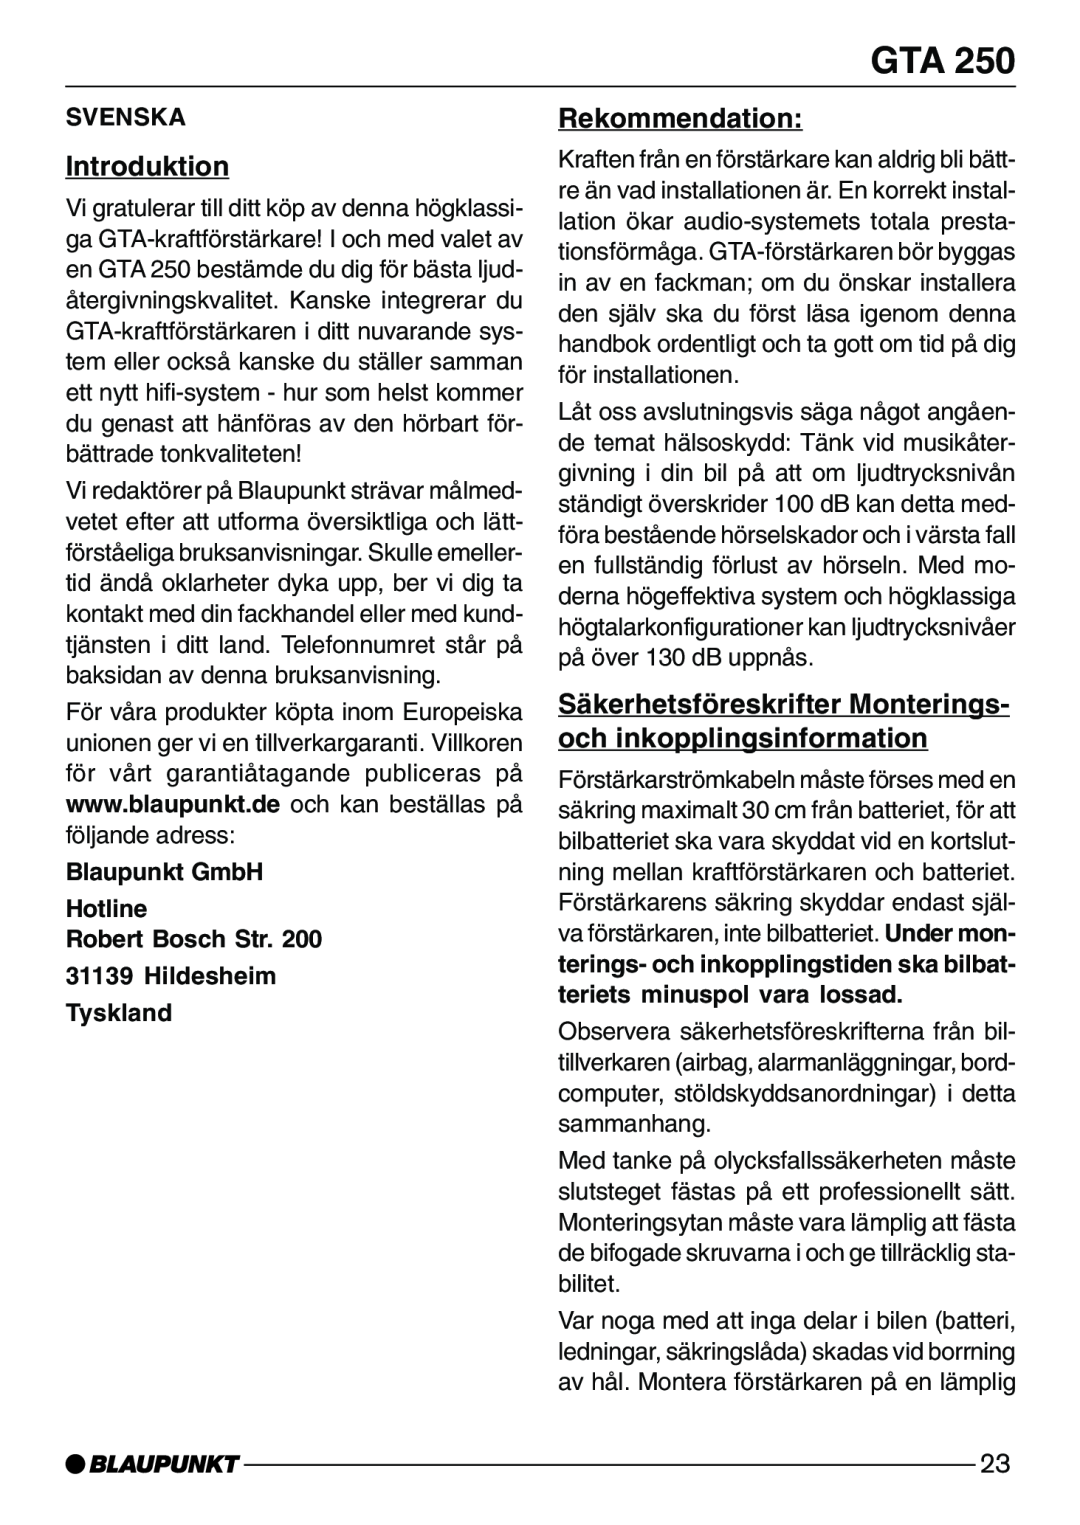 Blaupunkt GTA 250 Introduktion, Rekommendation, Svenska, Blaupunkt GmbH Hotline Robert Bosch Str, Hildesheim Tyskland 